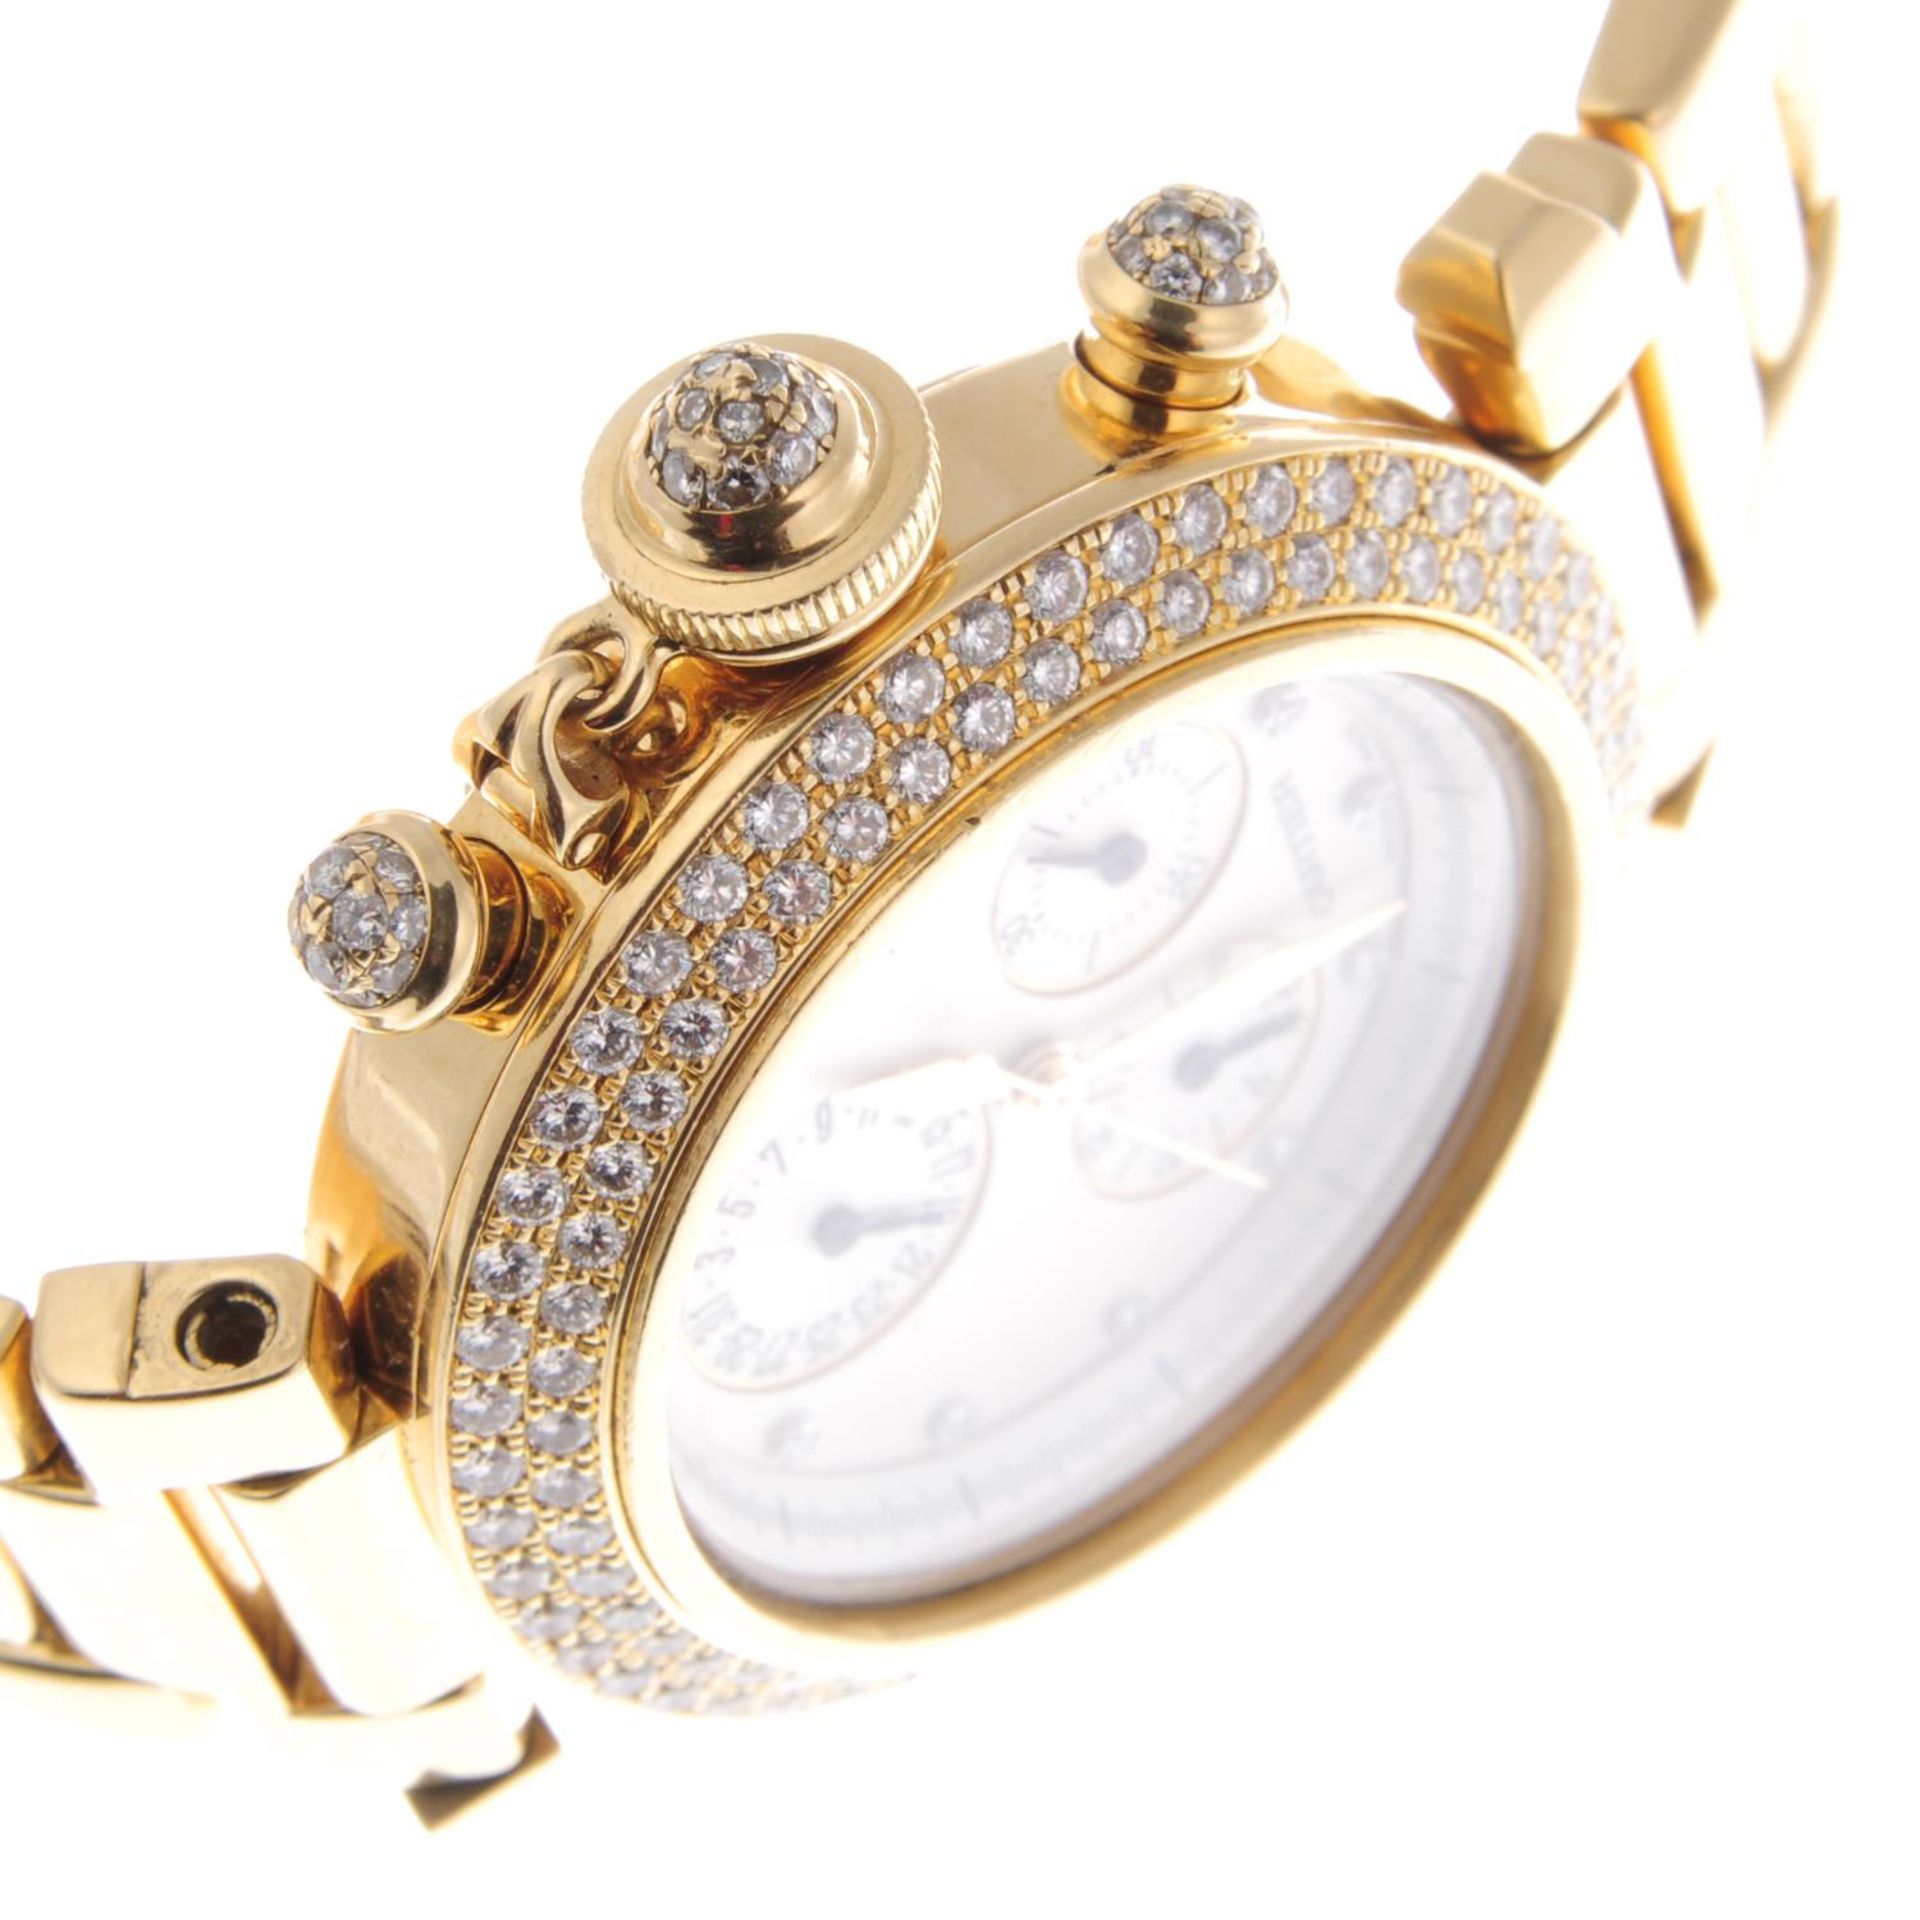 CARTIER - a Pasha chronograph bracelet watch. - Image 4 of 7